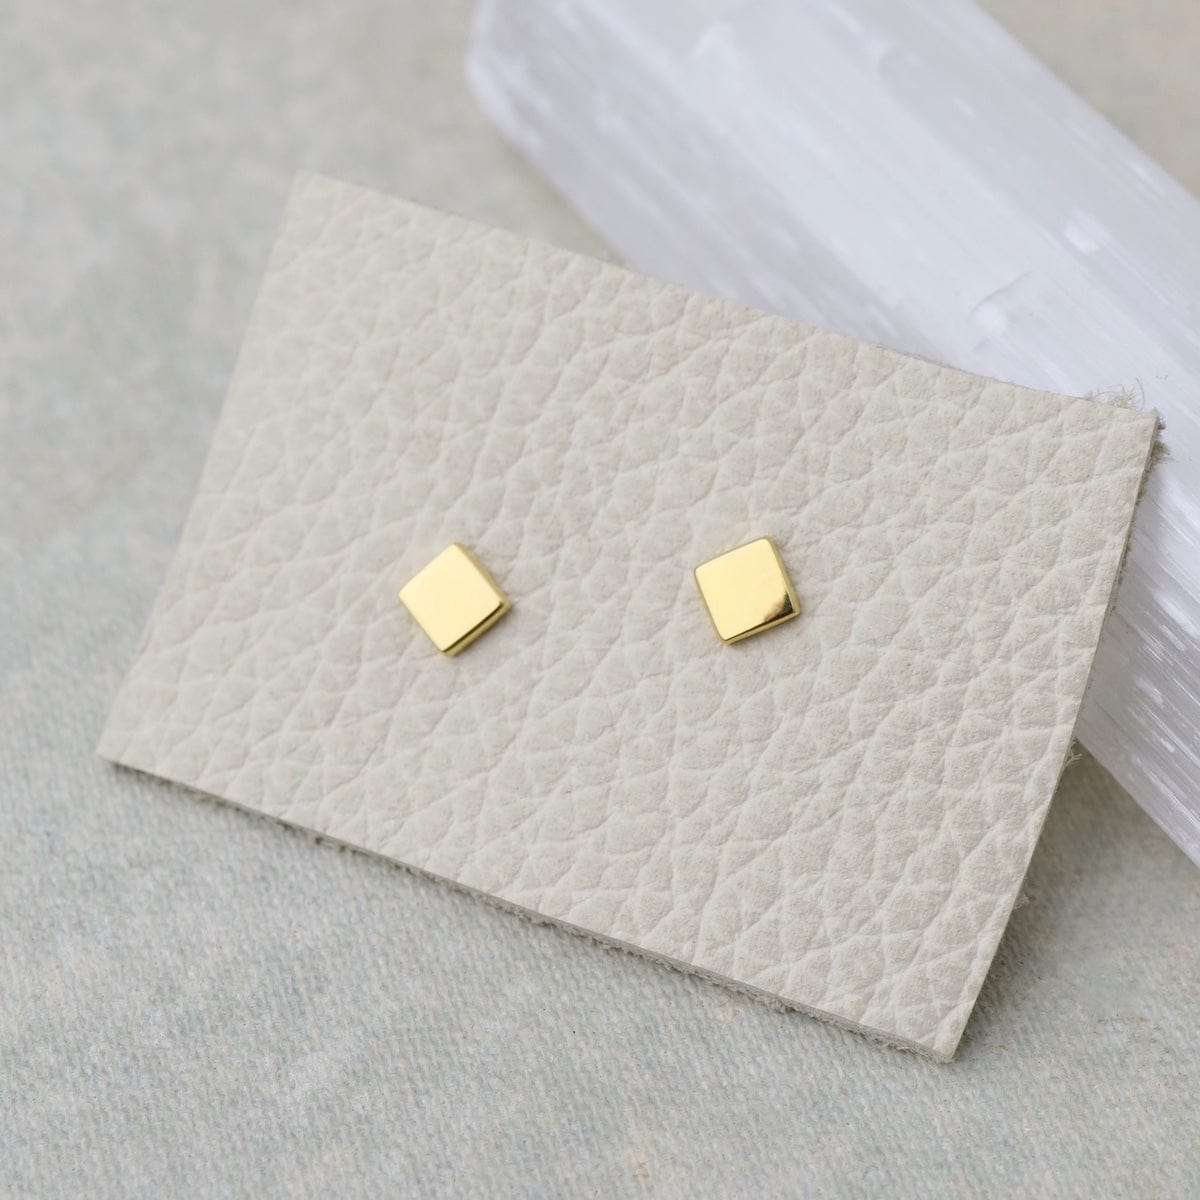 EAR-VRM Tiny Square Stud Earrings - Gold Vermeil